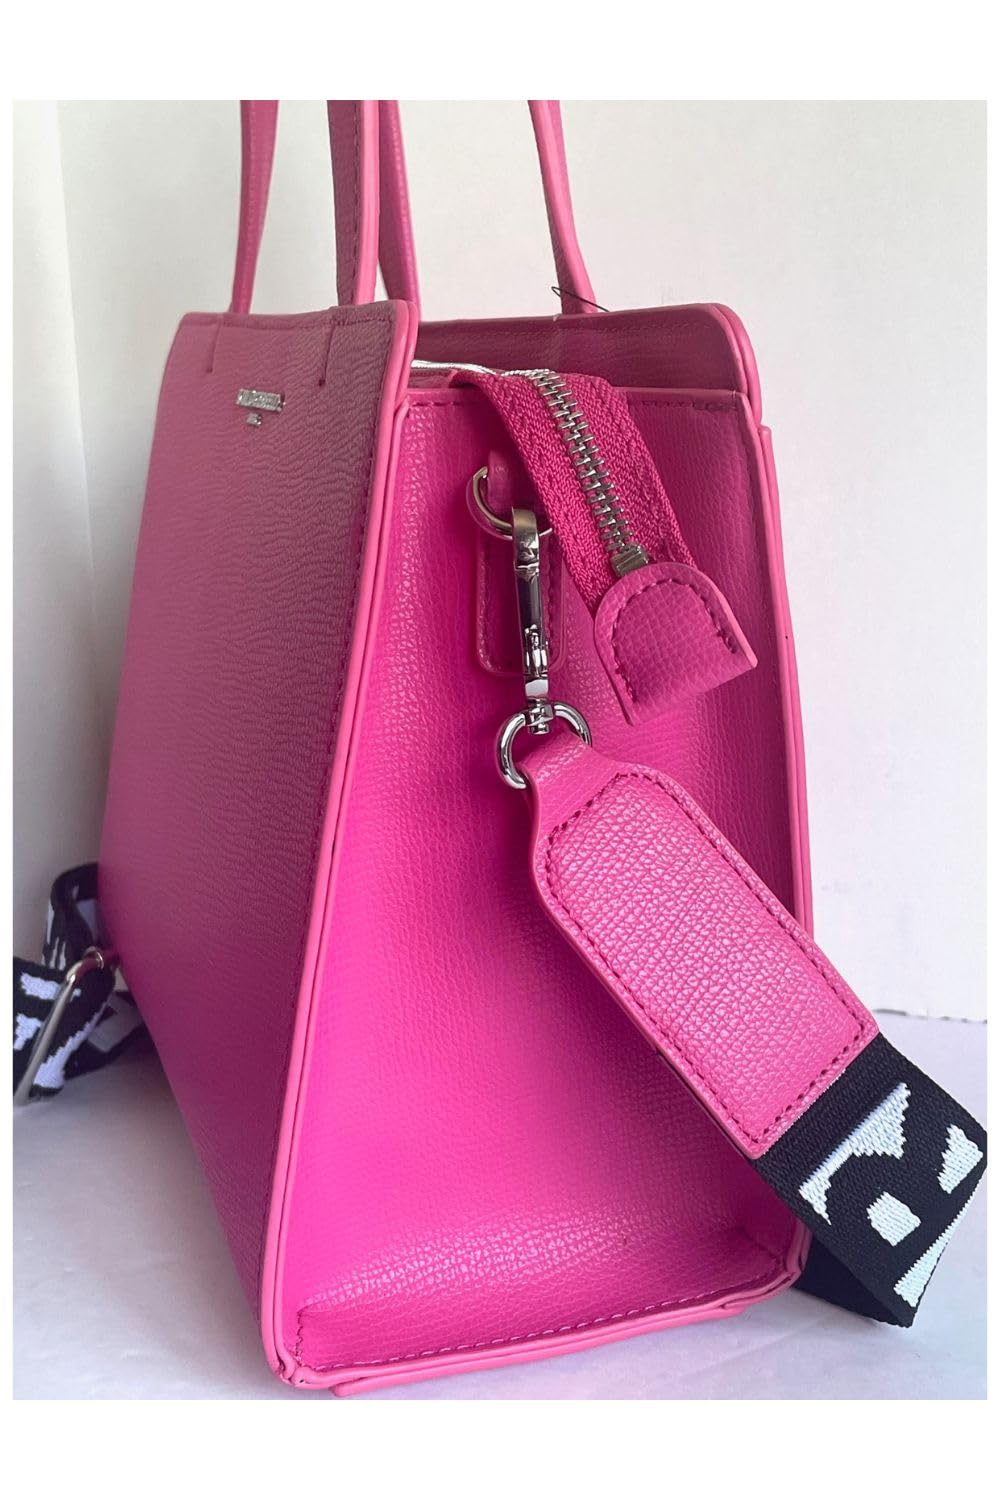 Karl Lagerfeld Paris Maybelle Satchel Handbag